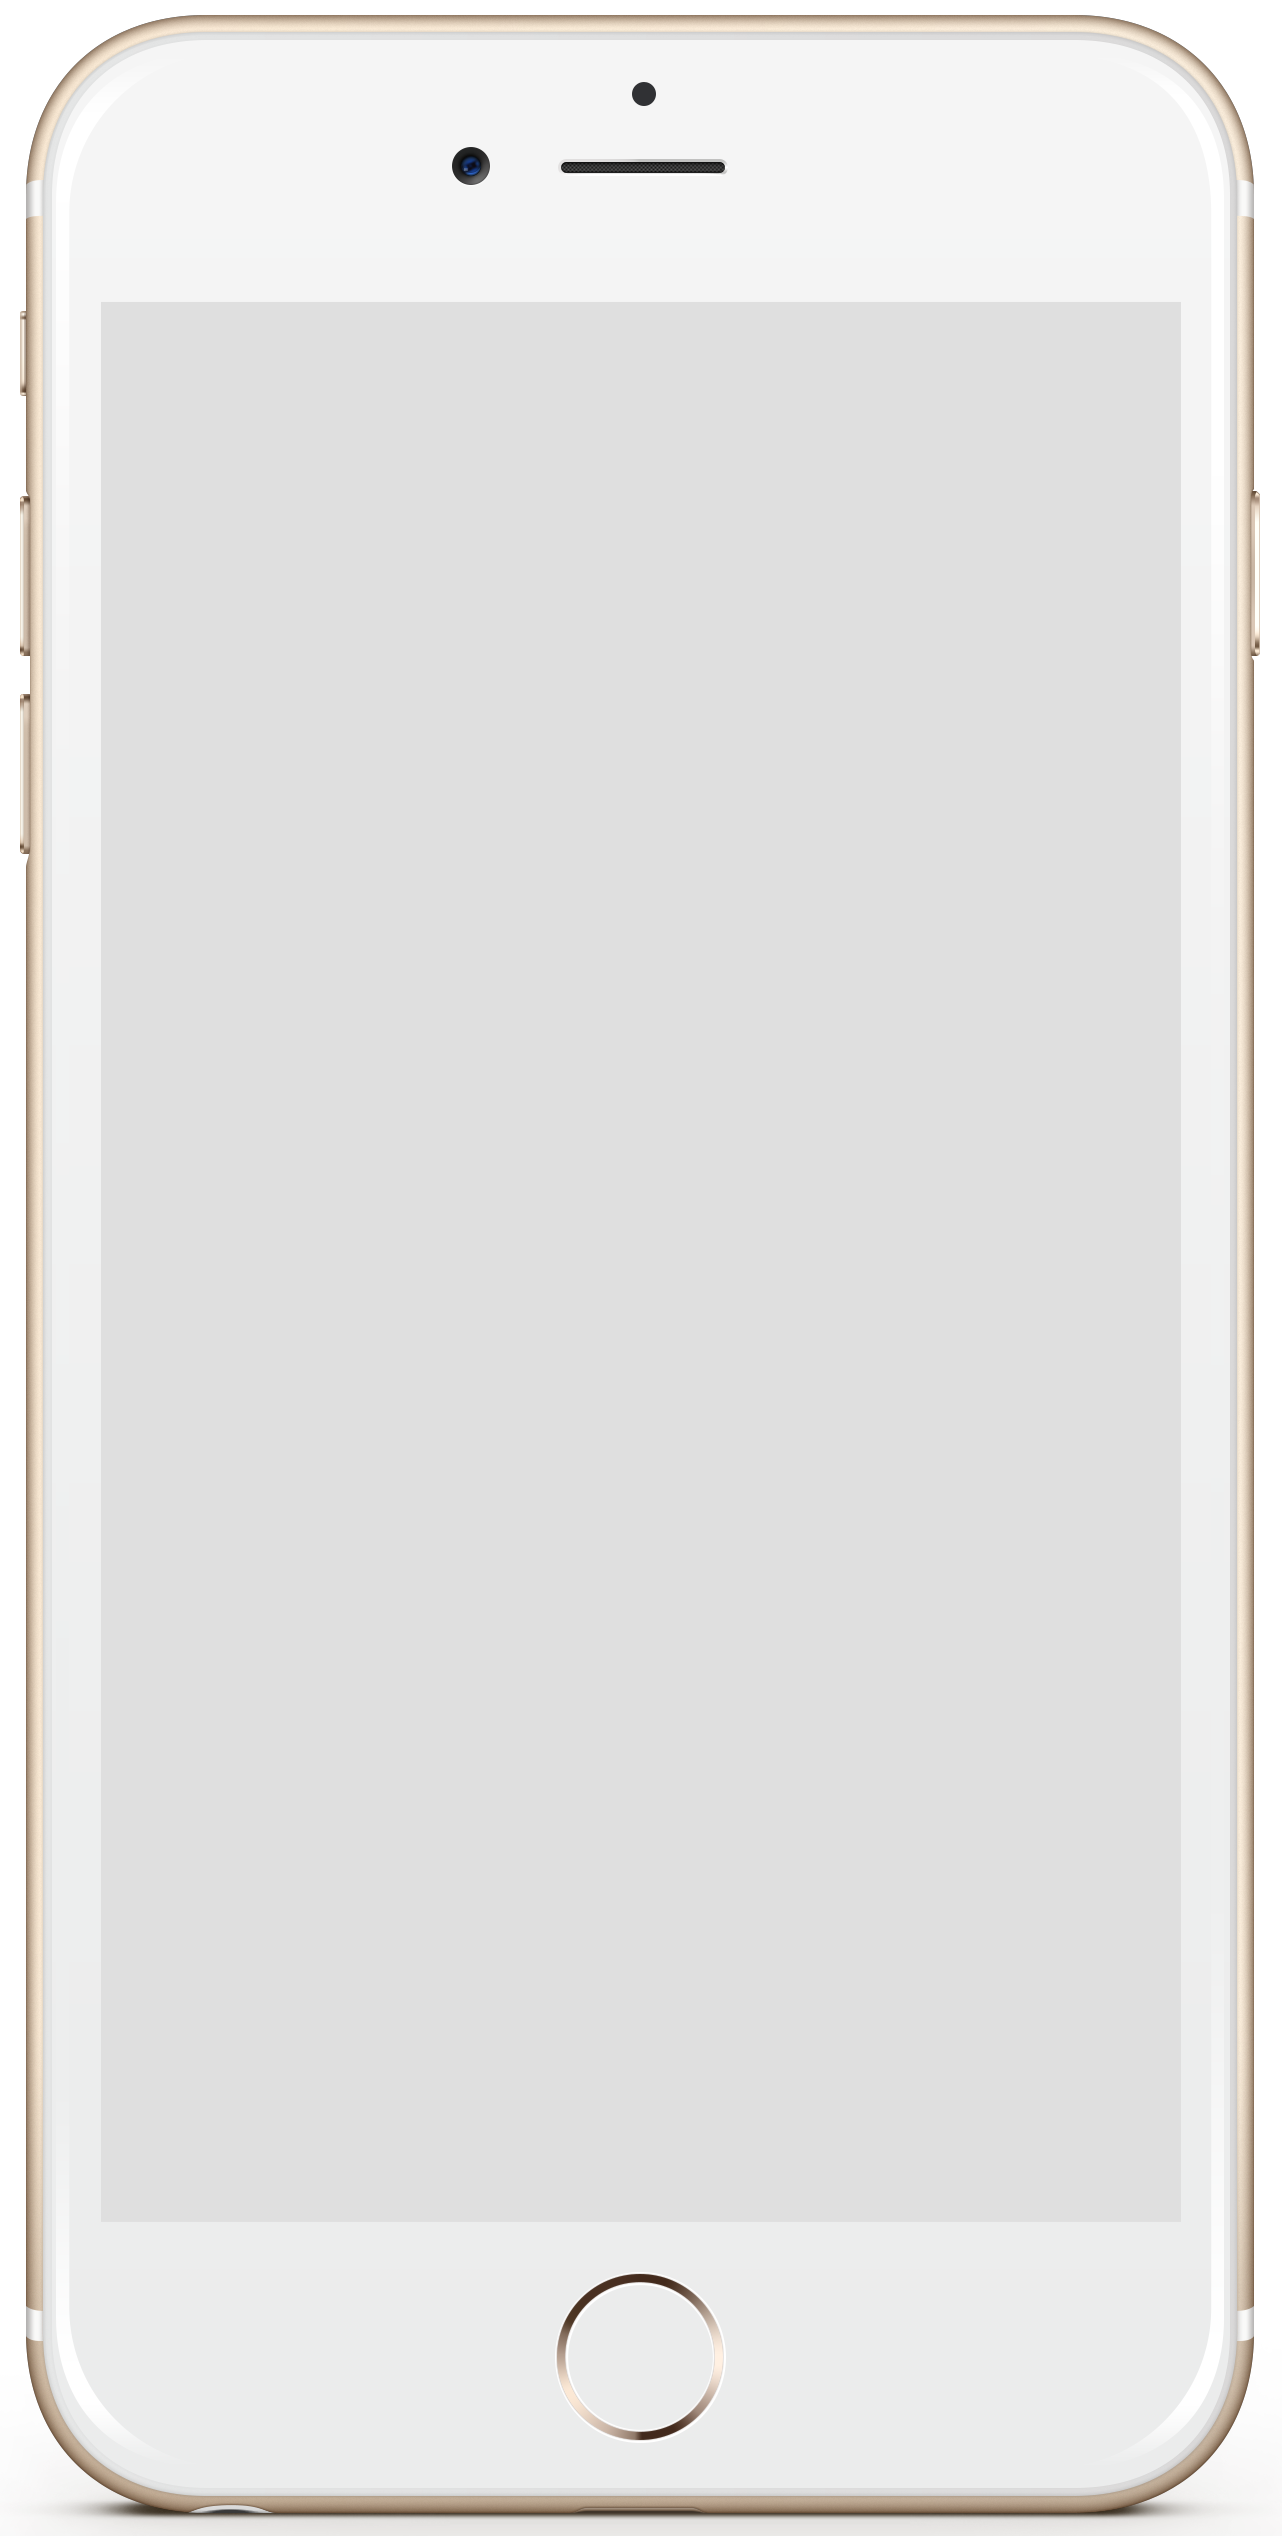 iphone screen